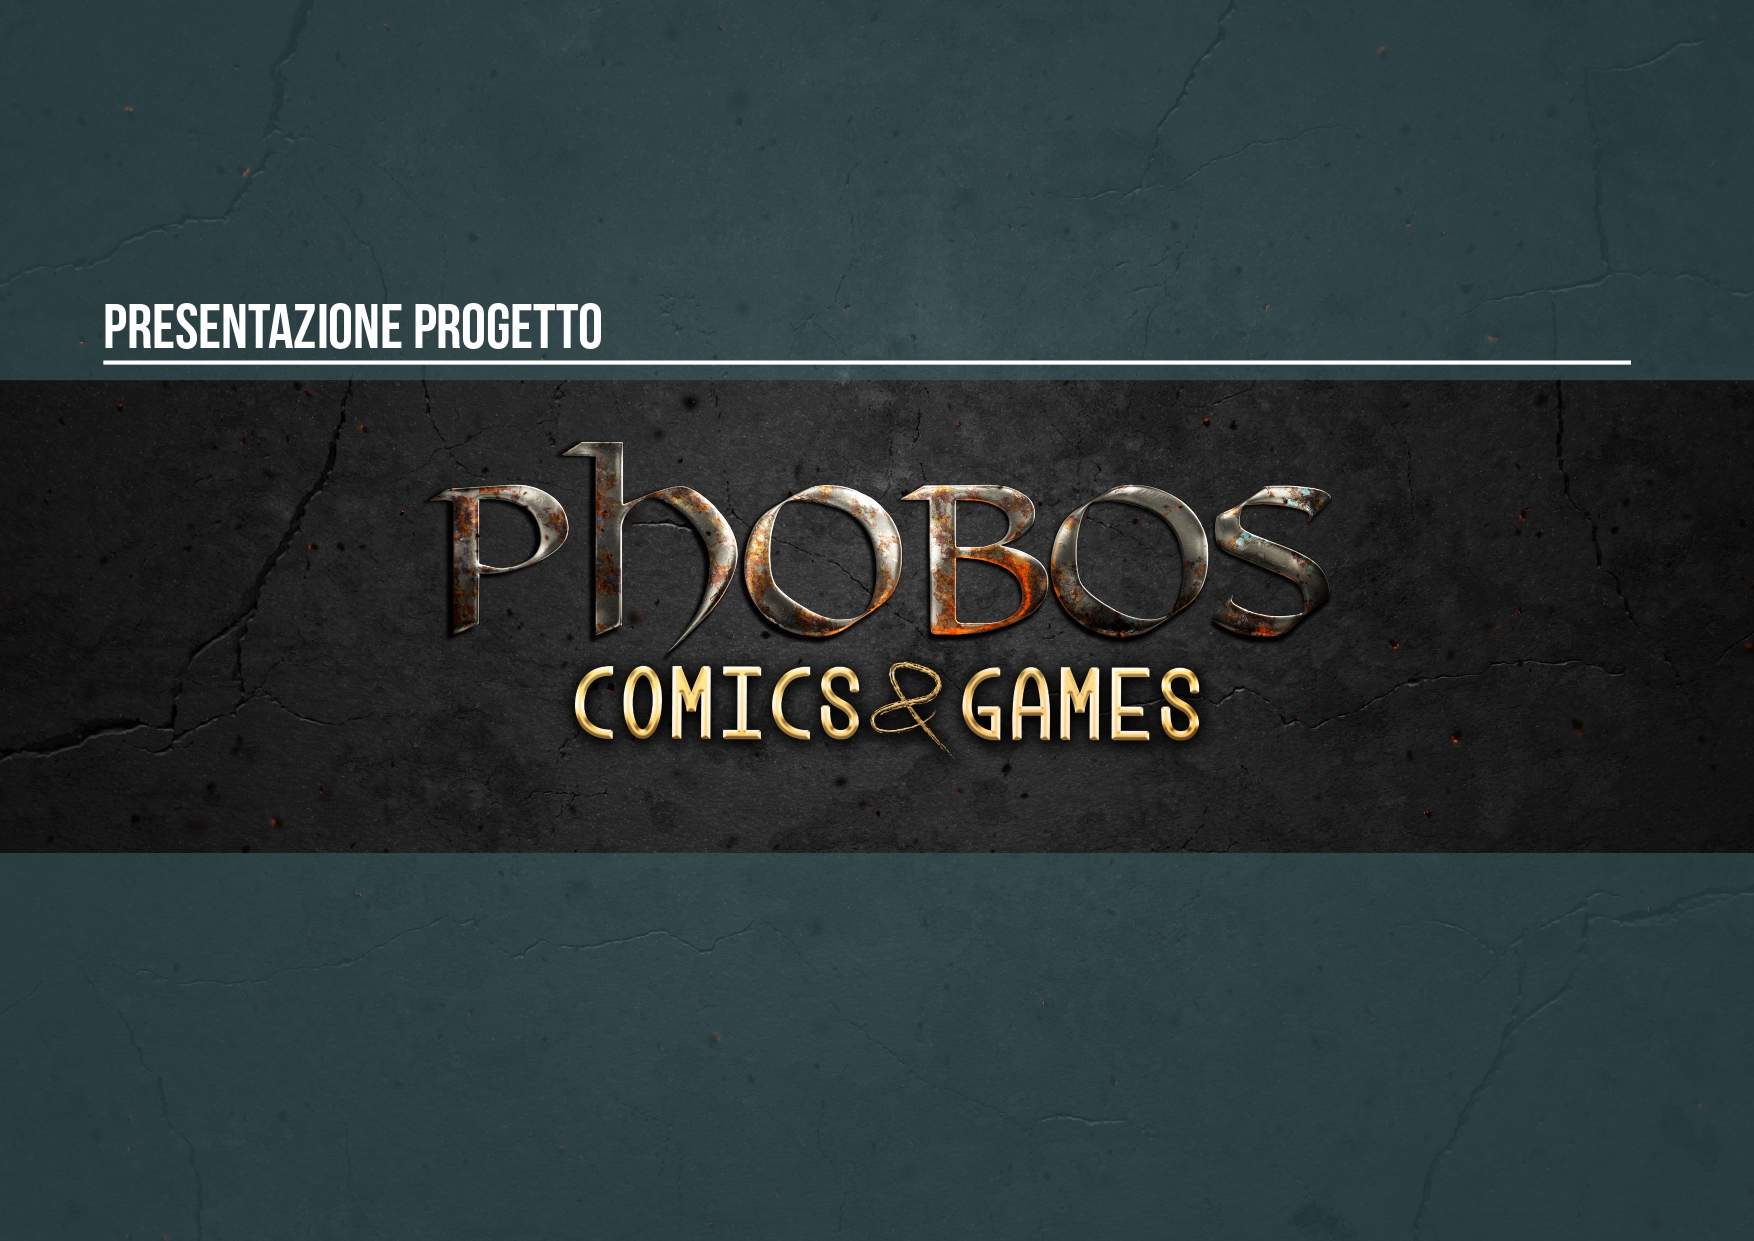 Phobos Comics&Games